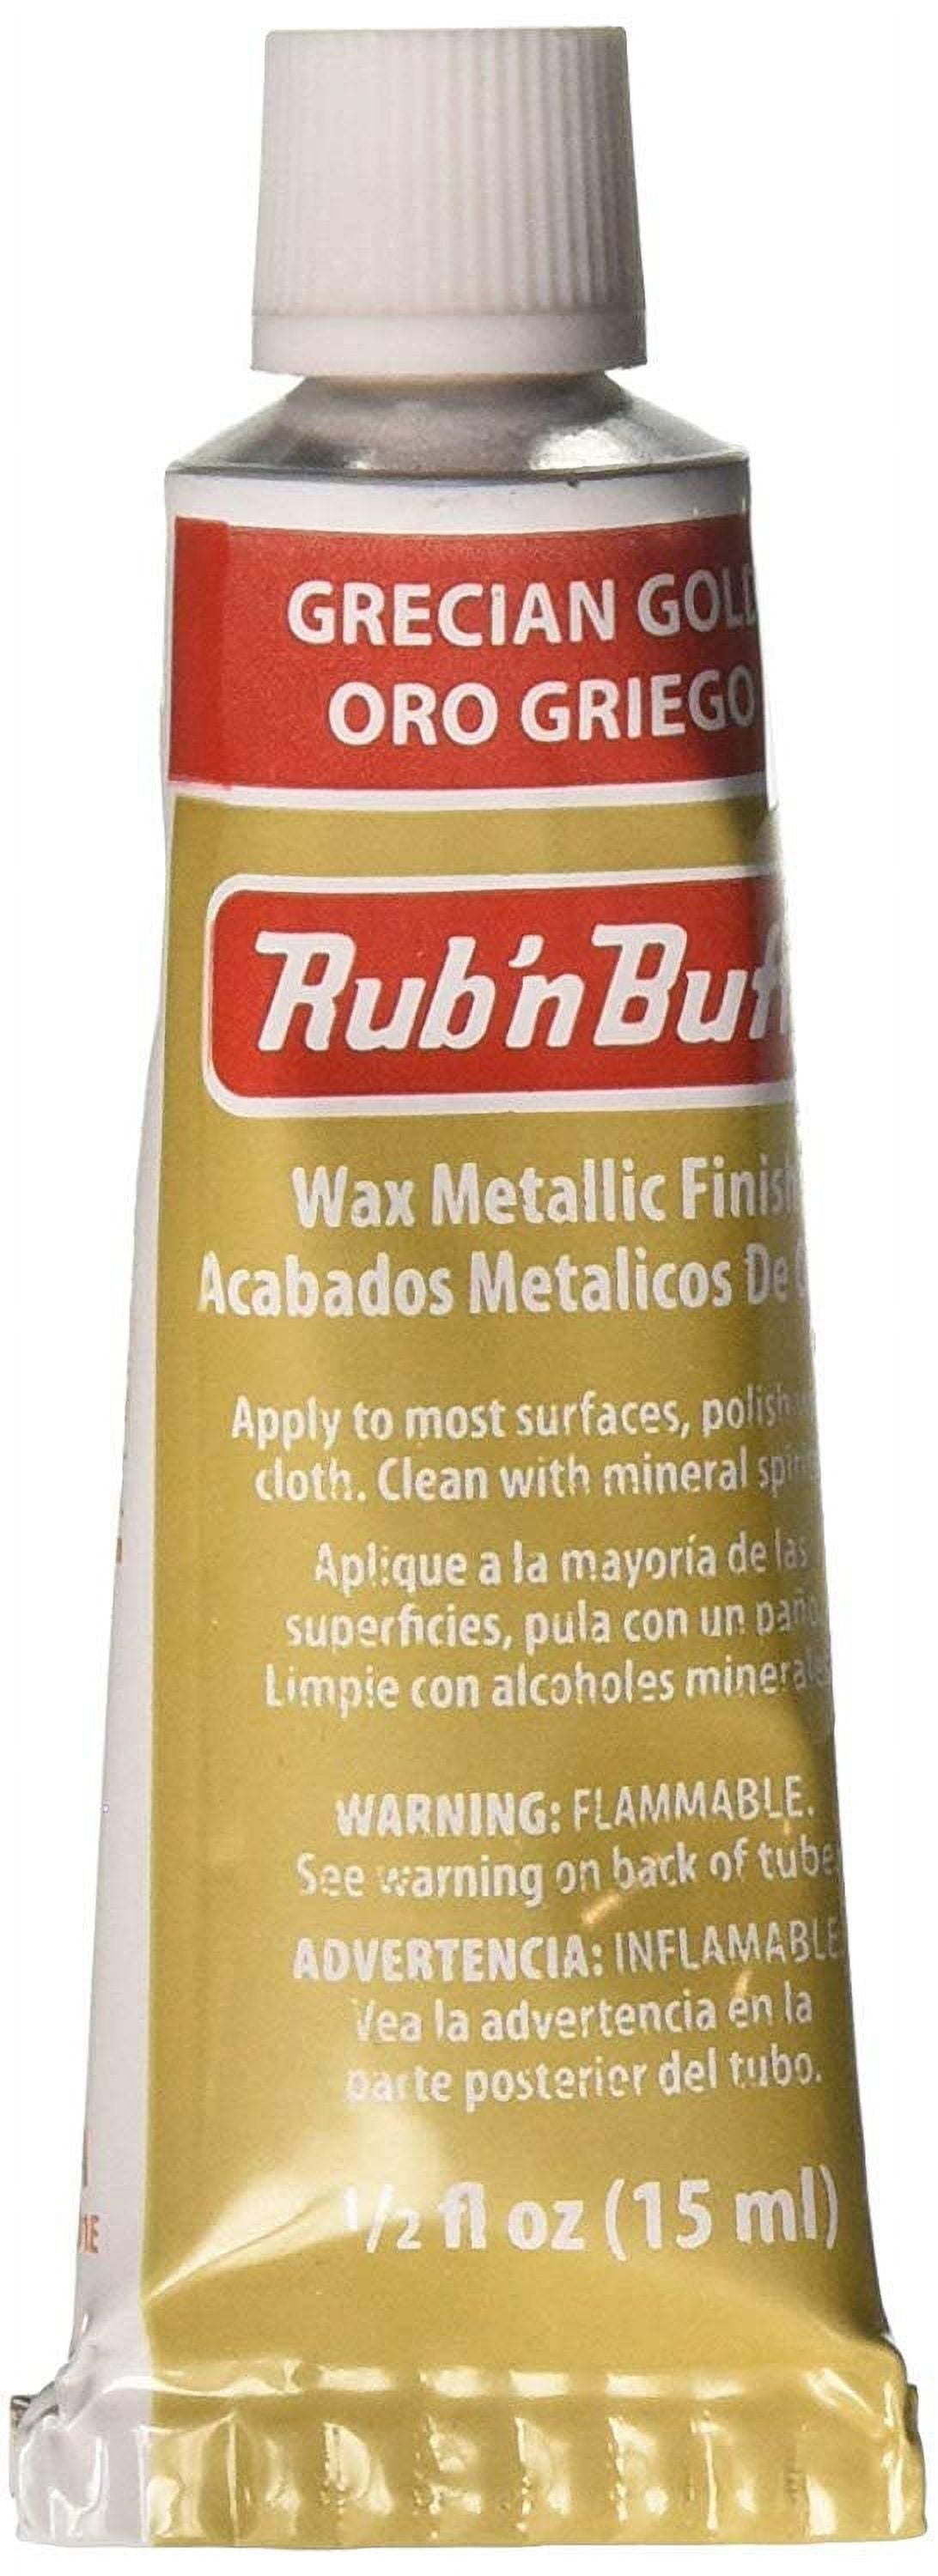 Original Rub 'n Buff Metallic Wax Finish .5oz Choice of Colors Leather Wood  Metal 15ml Grecian Gold -  Finland